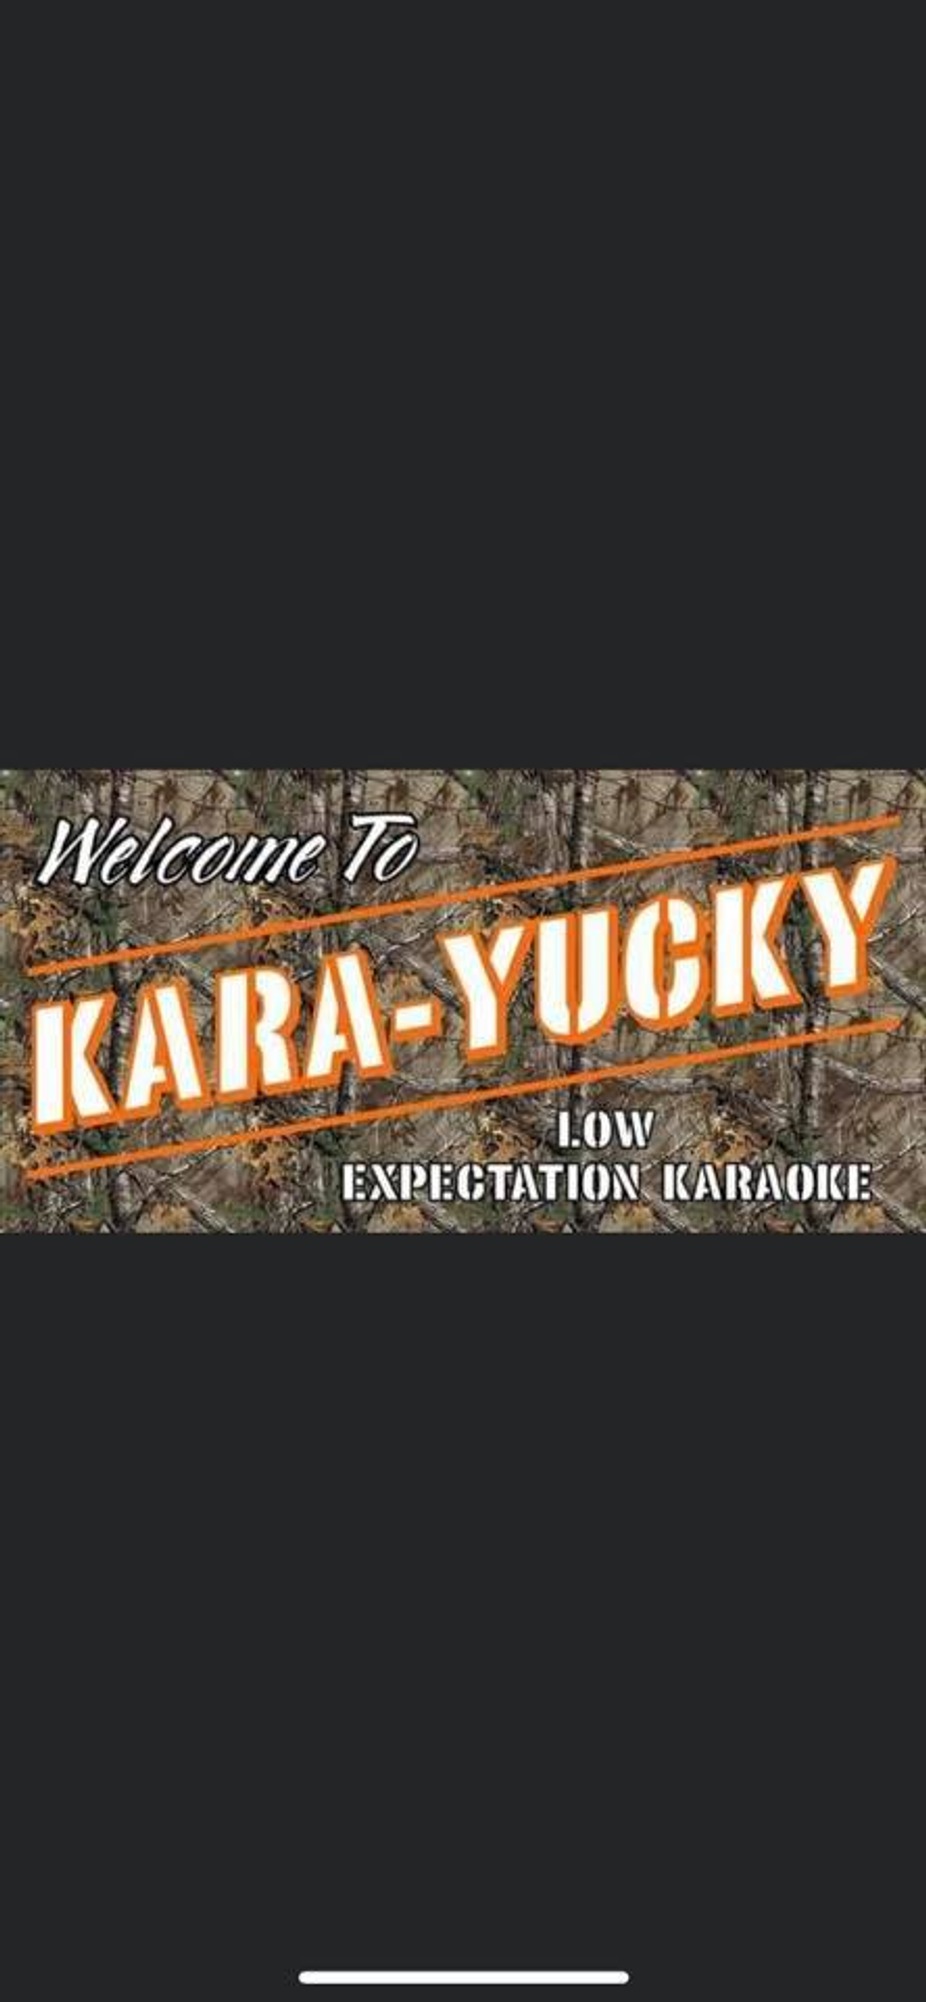 Kara-Yucky! event photo